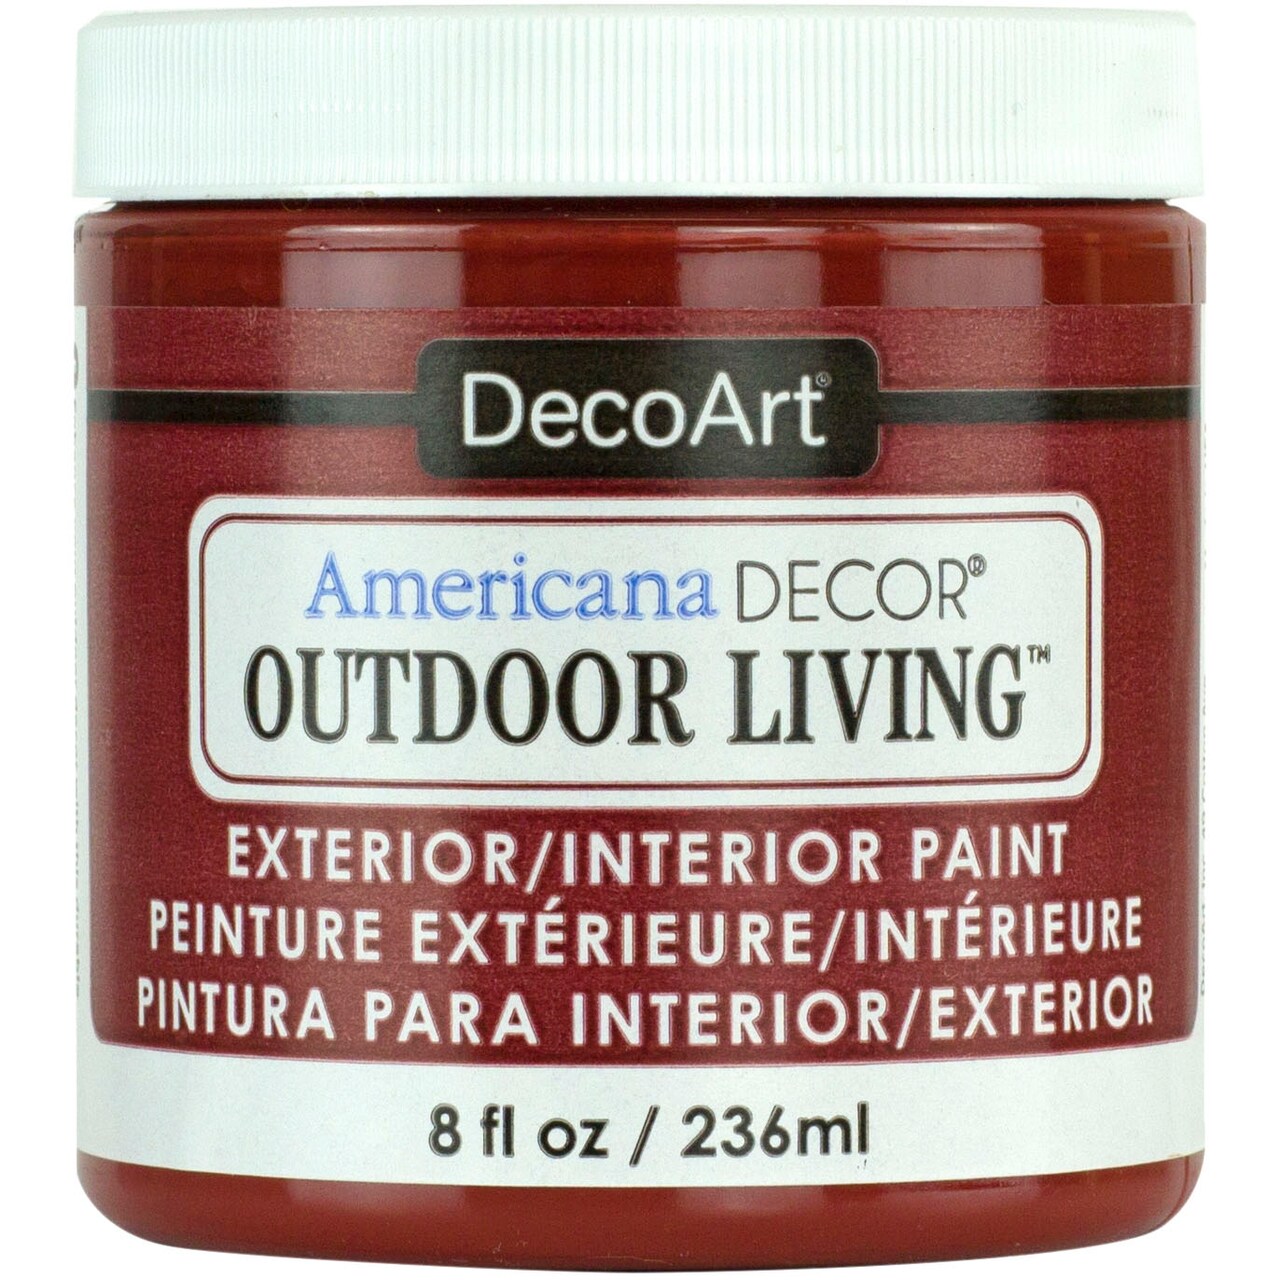 Decoart Americana Decor Outdoor Living Paint, 8 Oz., Fire Pit